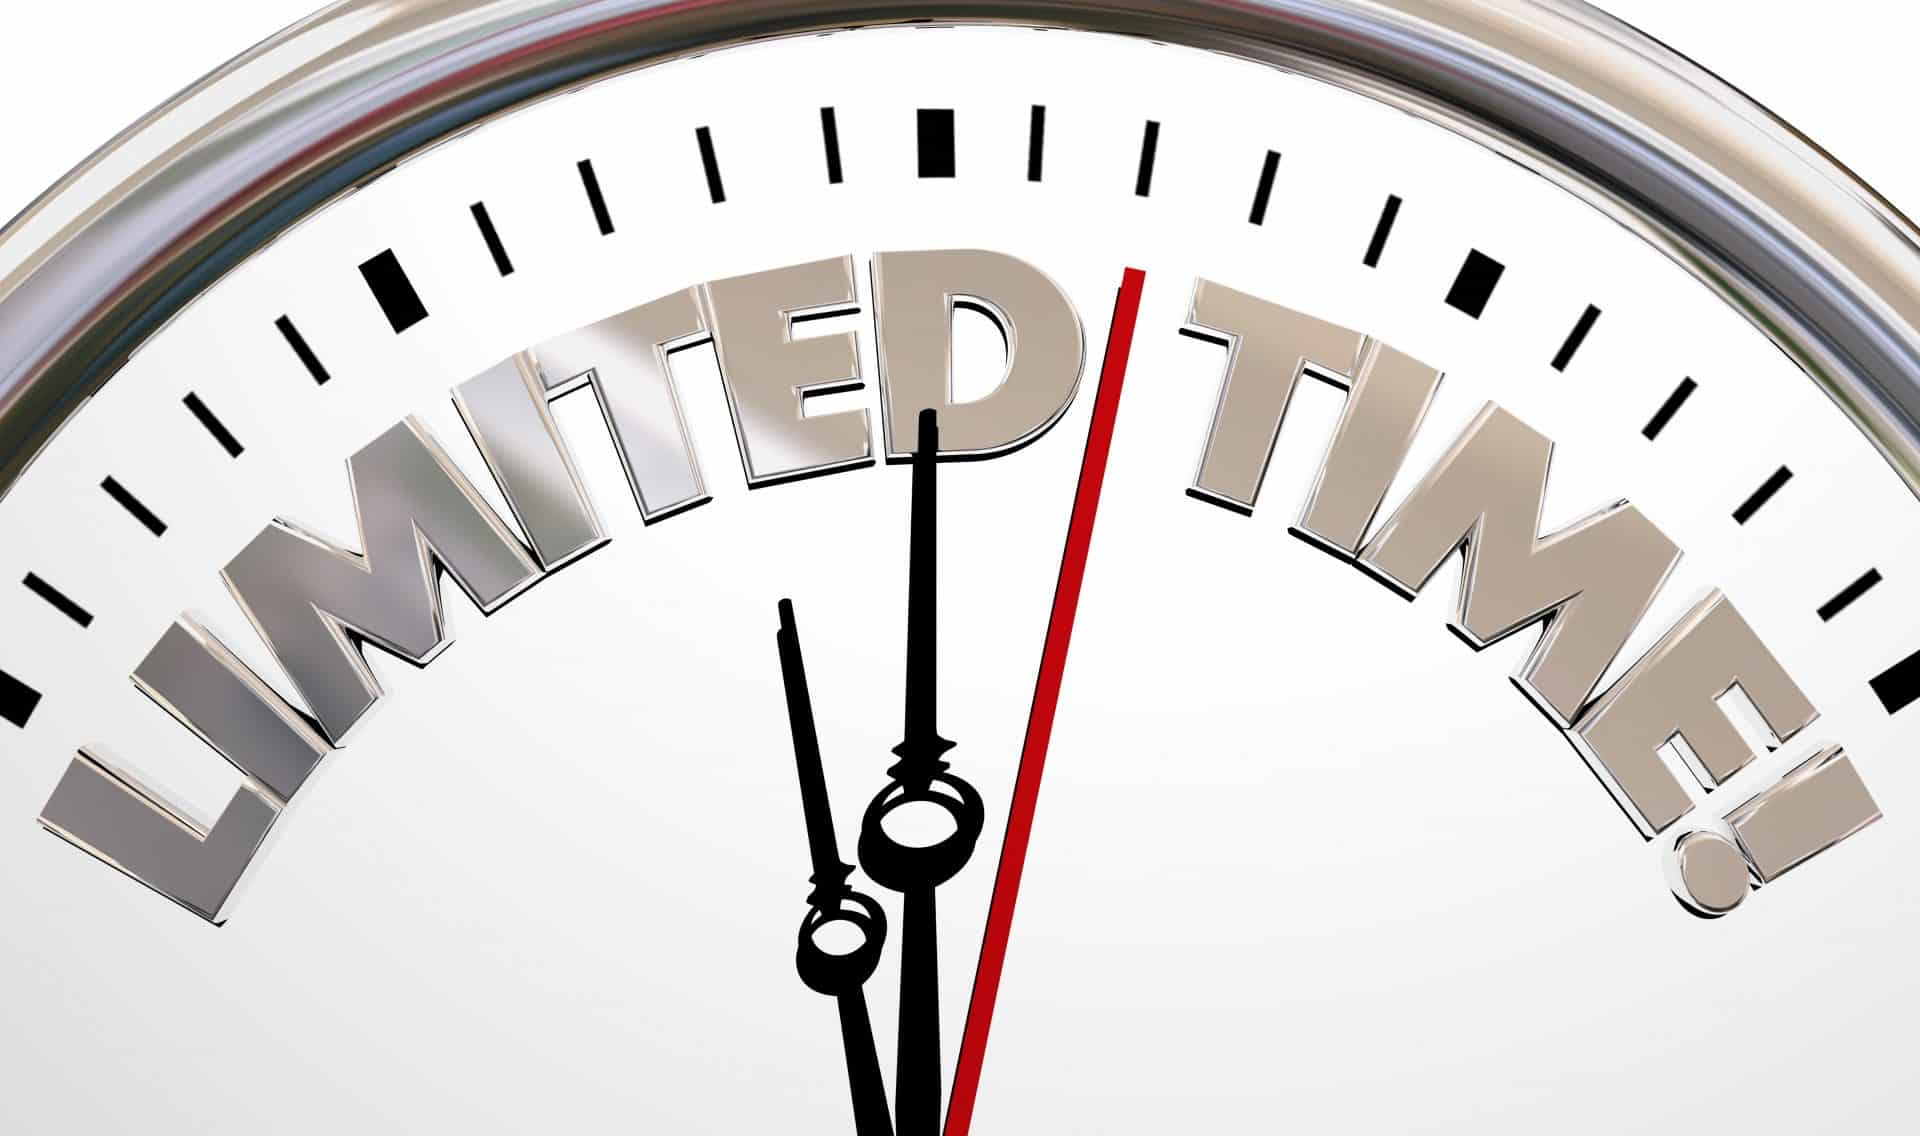 Limited Time Clock Deadline Countdown Words 3d Illustration.jpg